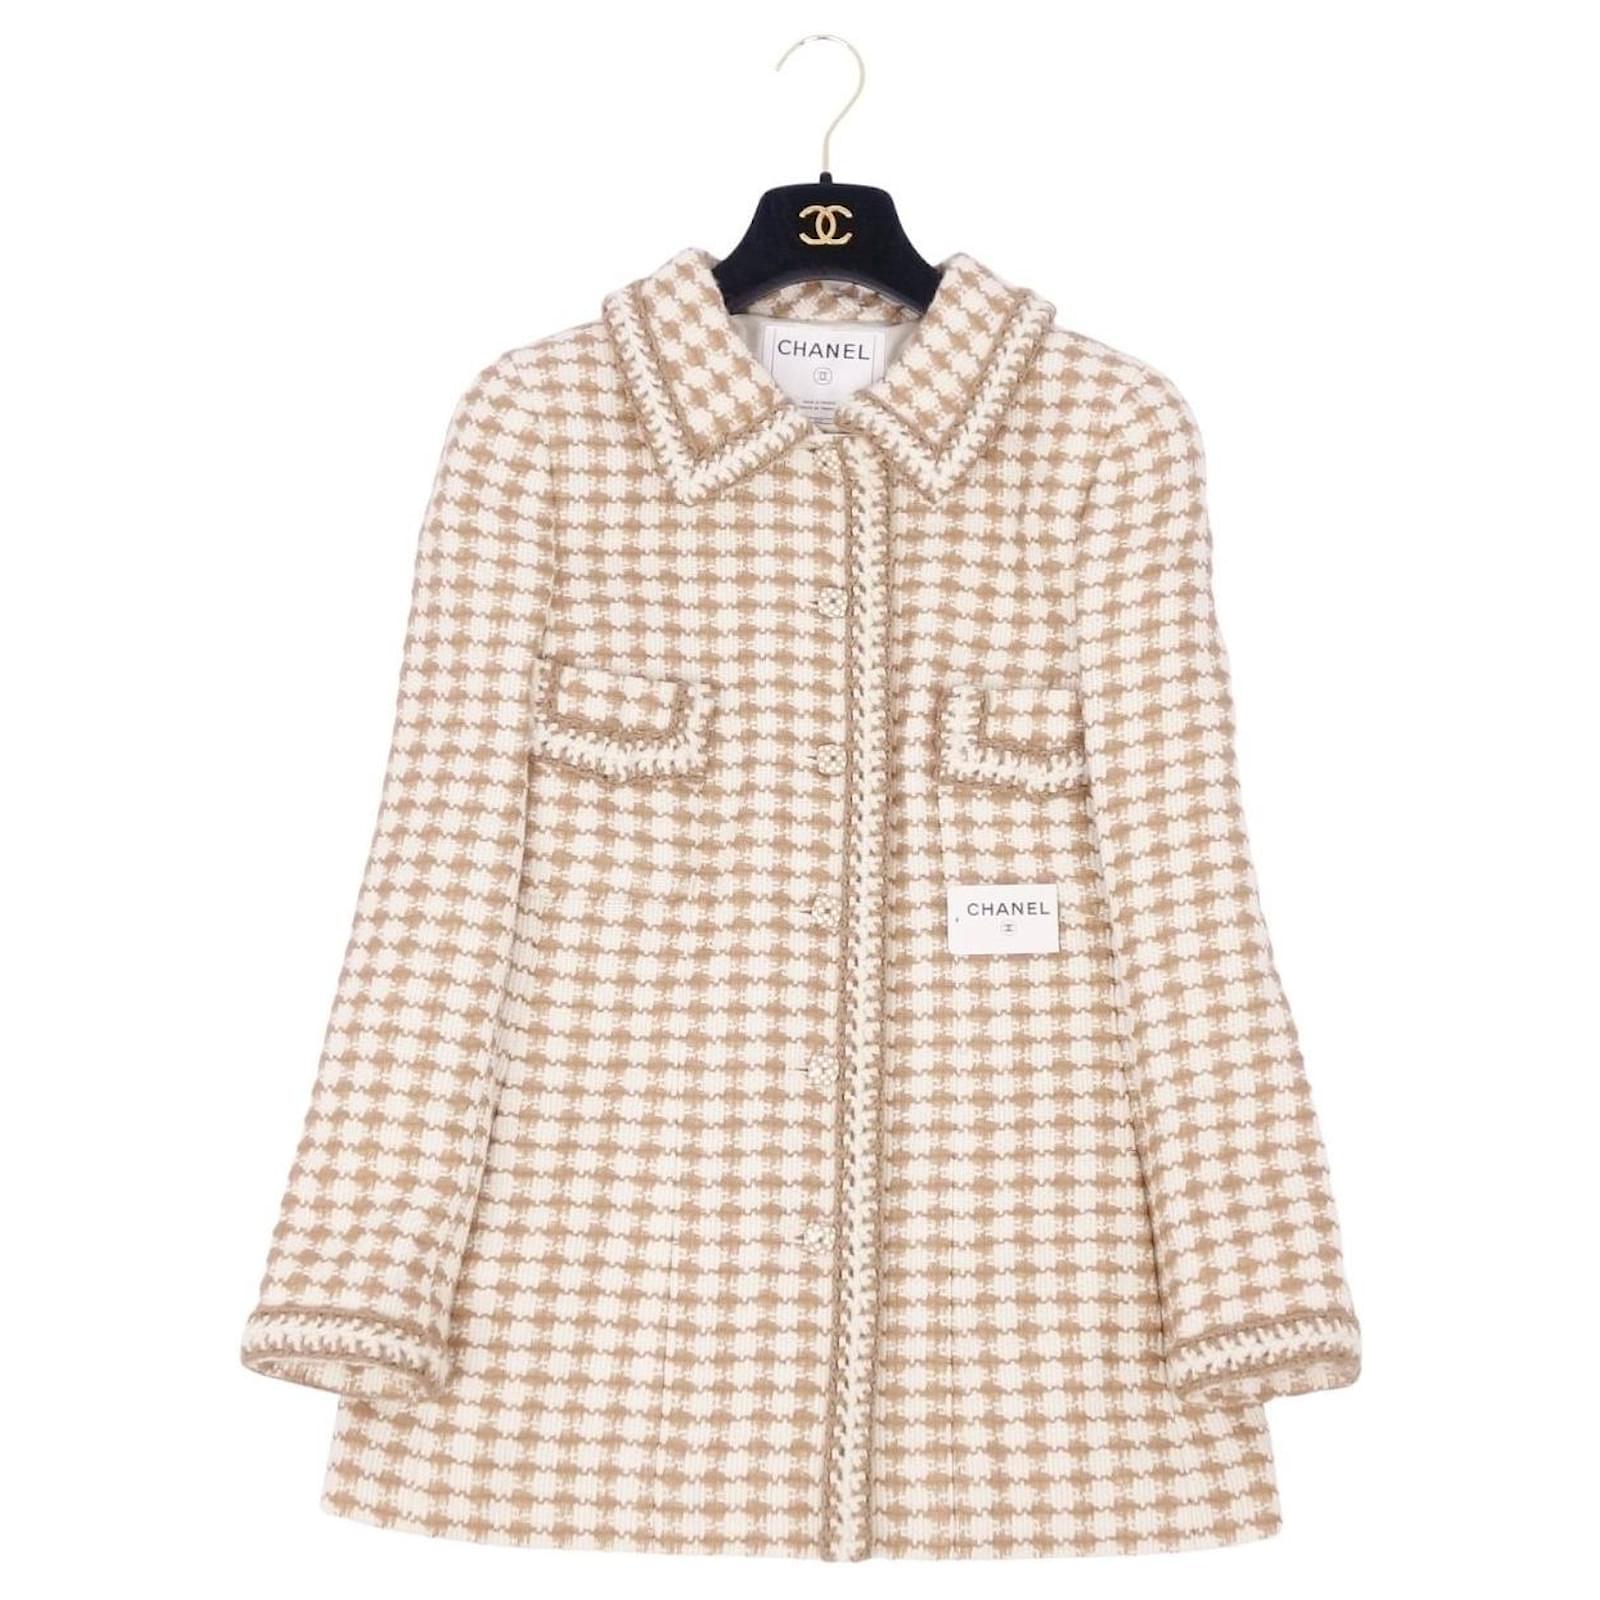 Chanelinspired Tweed Jacket Patterns  Sewdirect UK